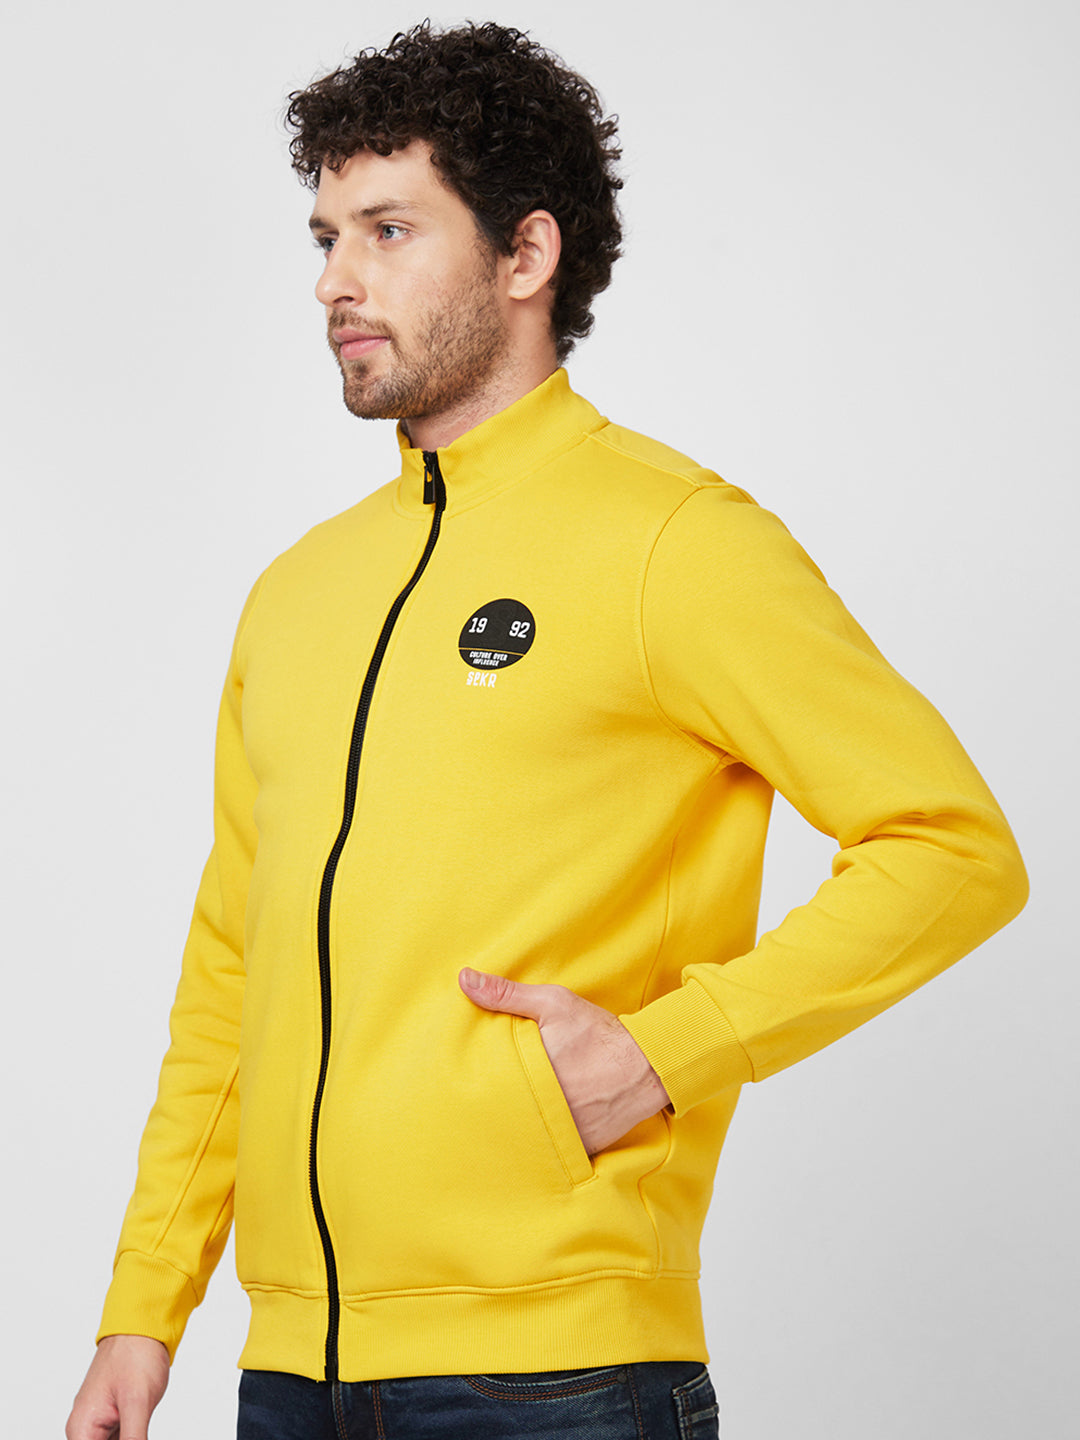 Spykar High Neck Full Sleeve Yellow Sweatshirt For Men